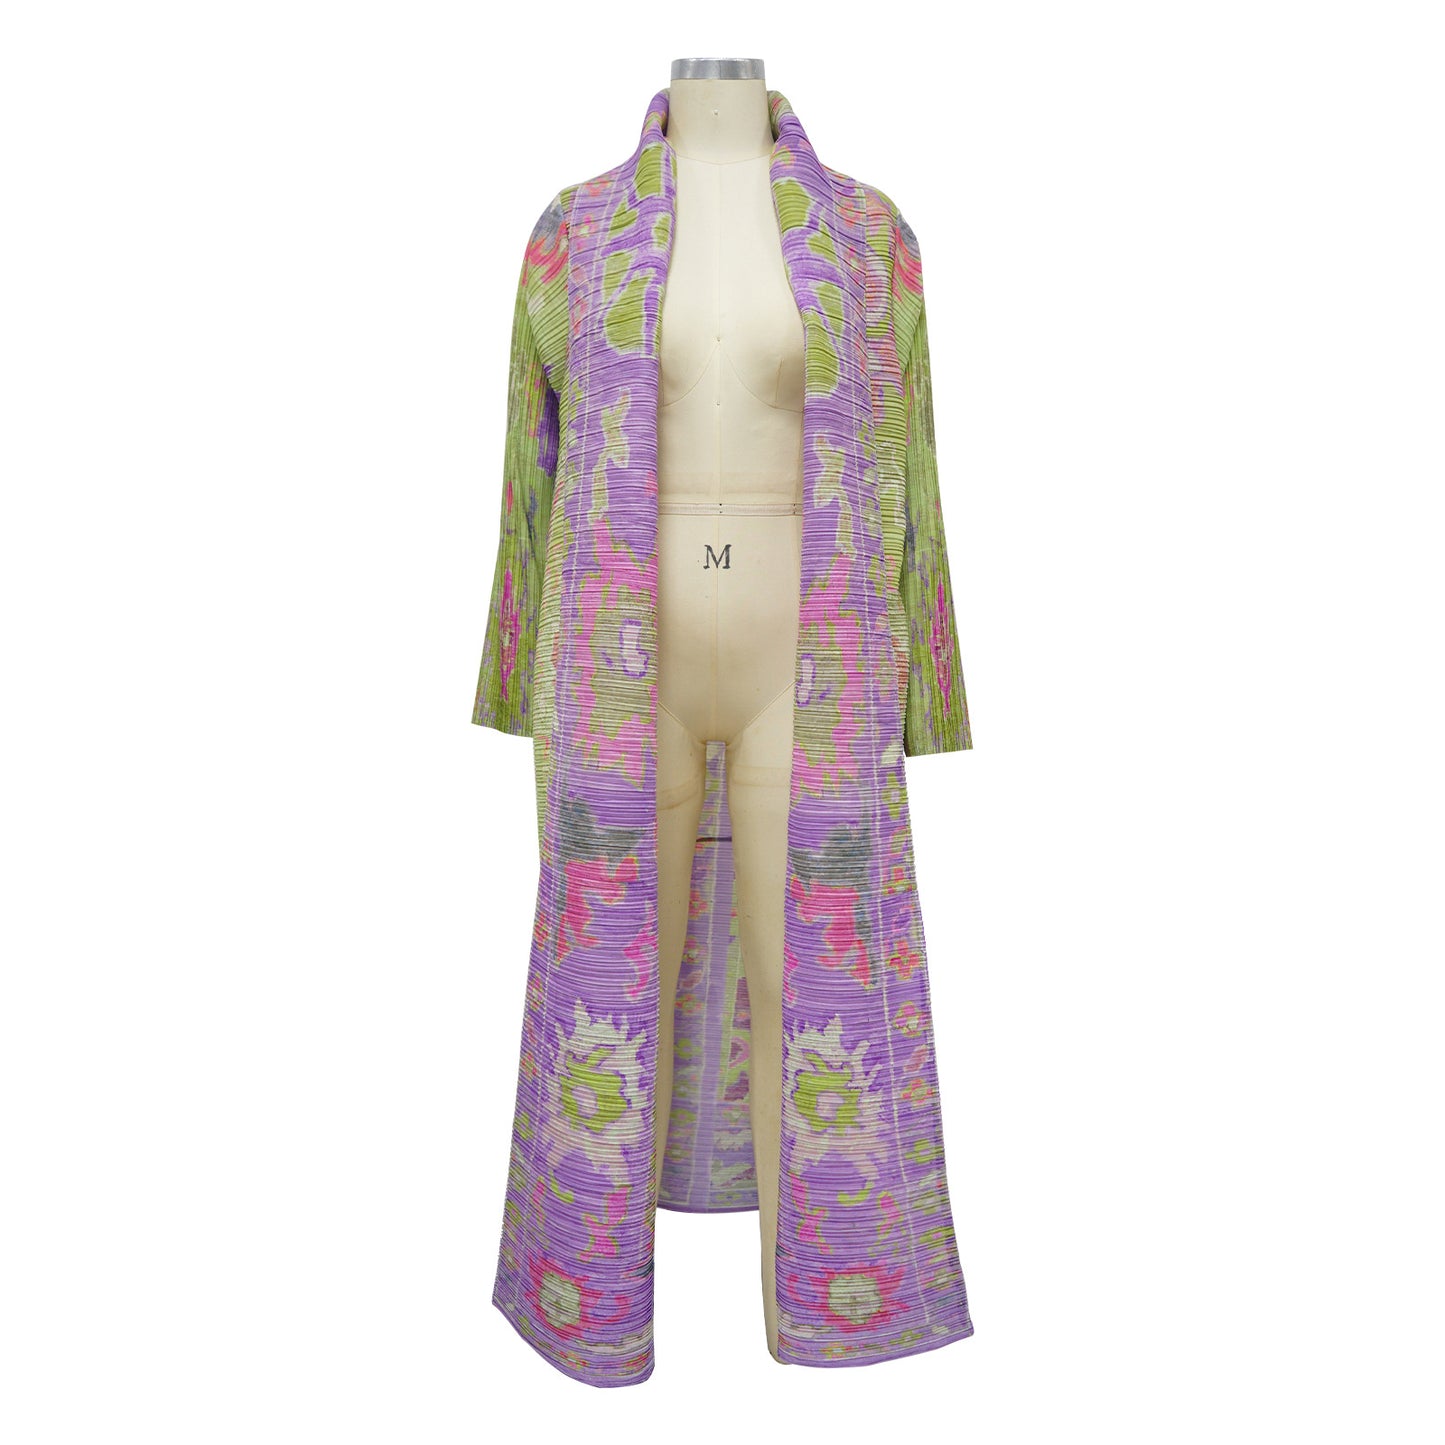 BamBam Pleated Printed Plus Size Windbreaker Long Coat For Women - BamBam